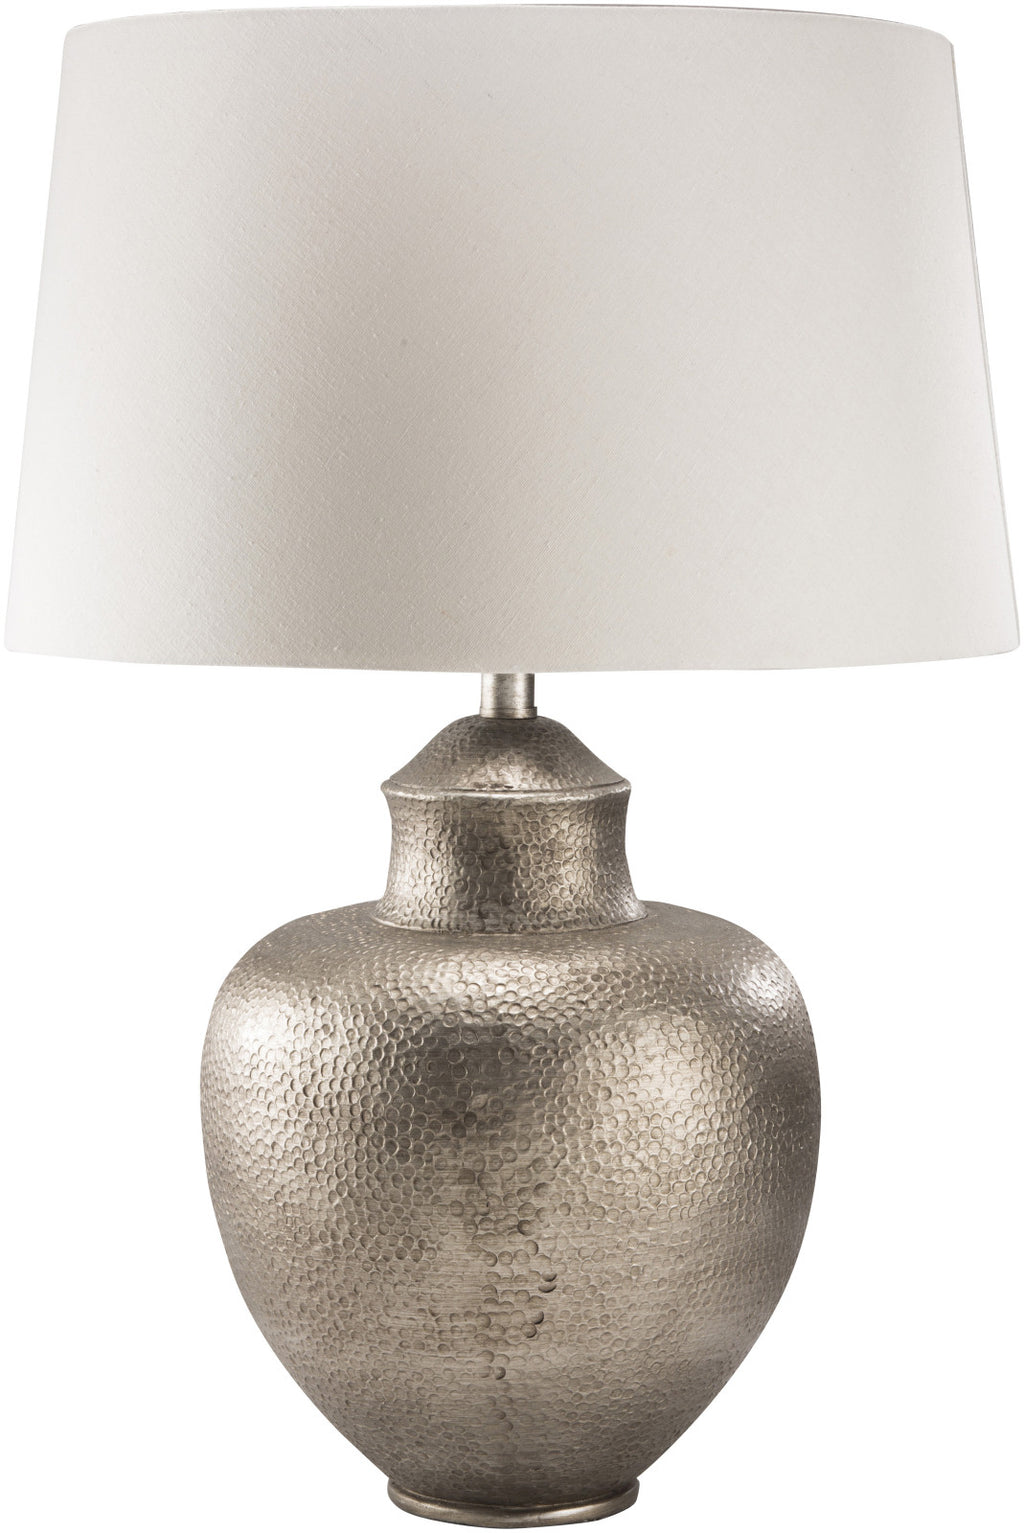 Surya Cooper CPLP-001 White Lamp Table Lamp